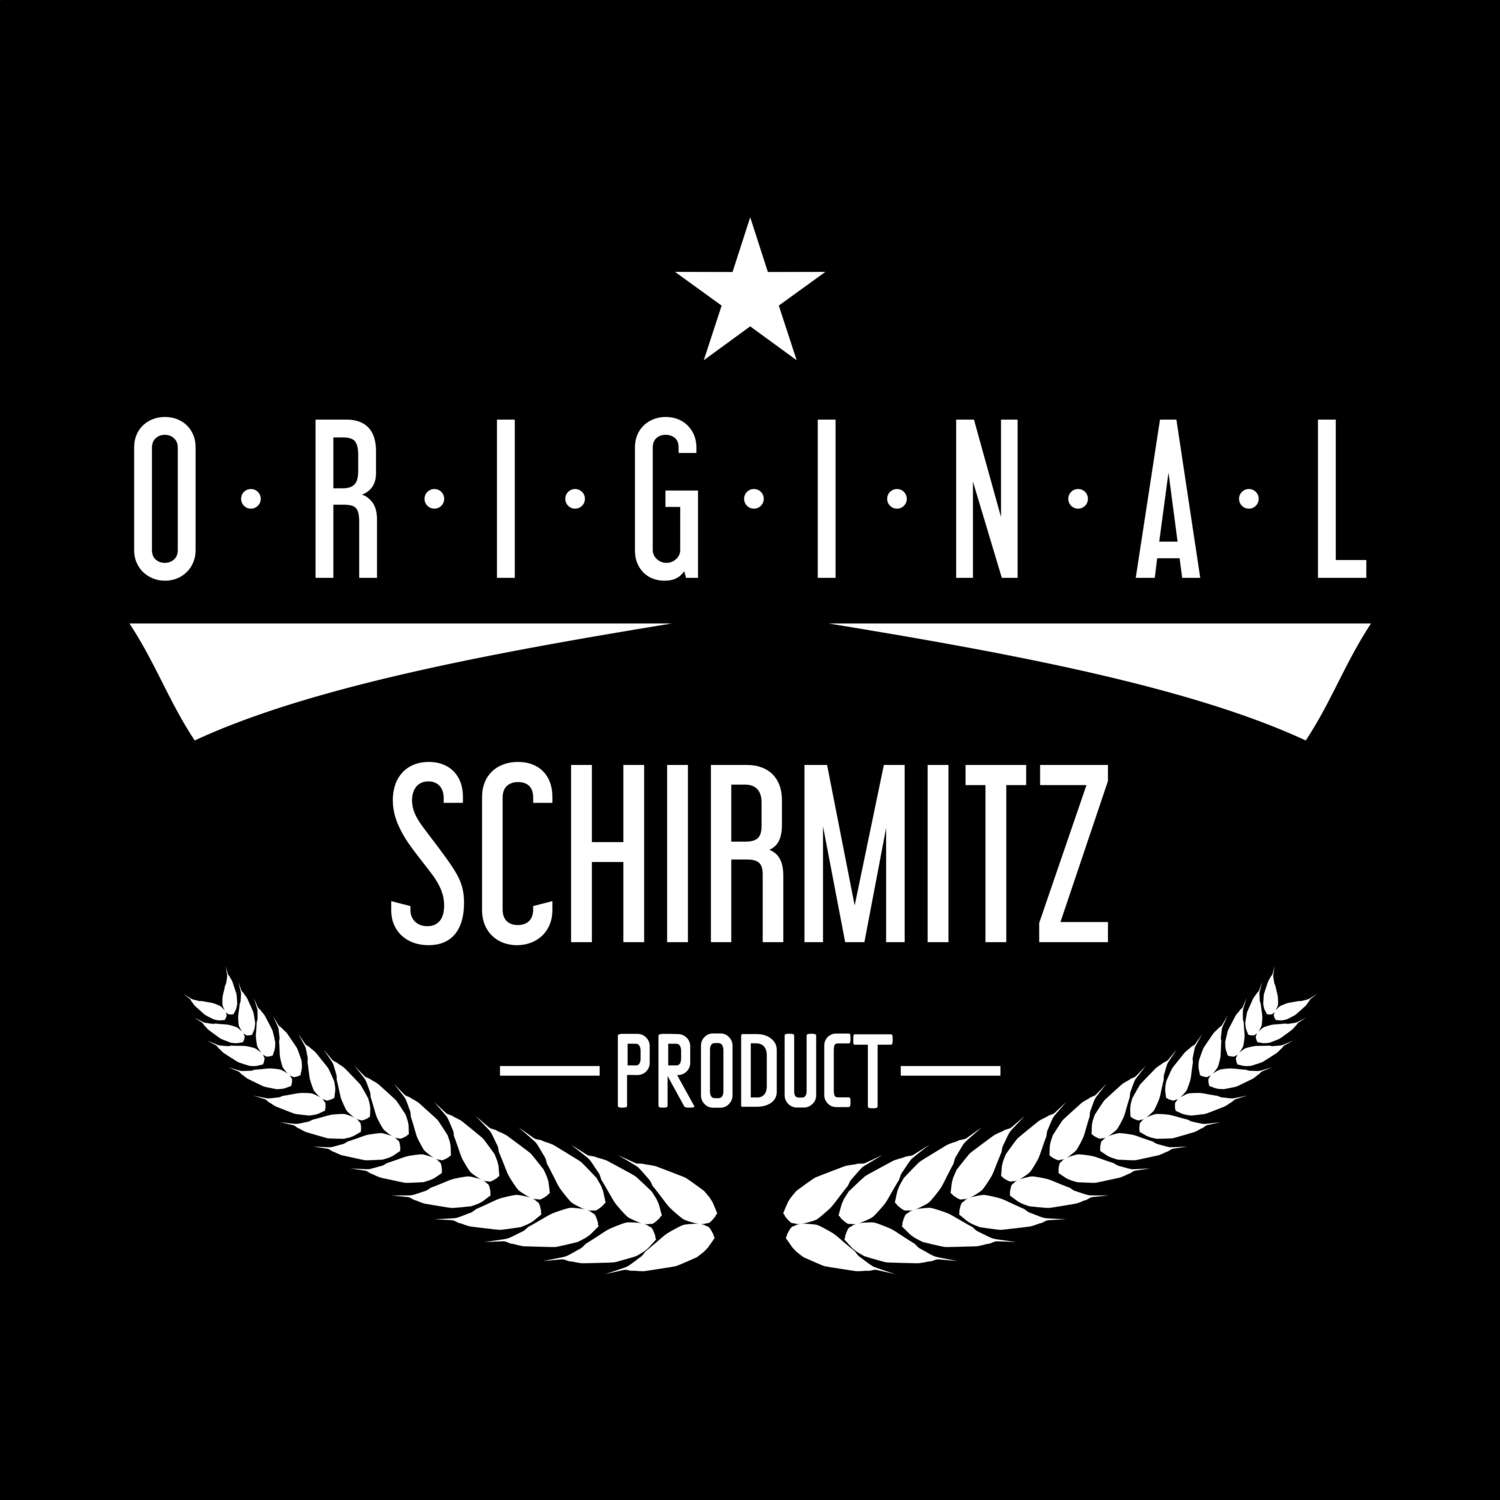 Schirmitz T-Shirt »Original Product«